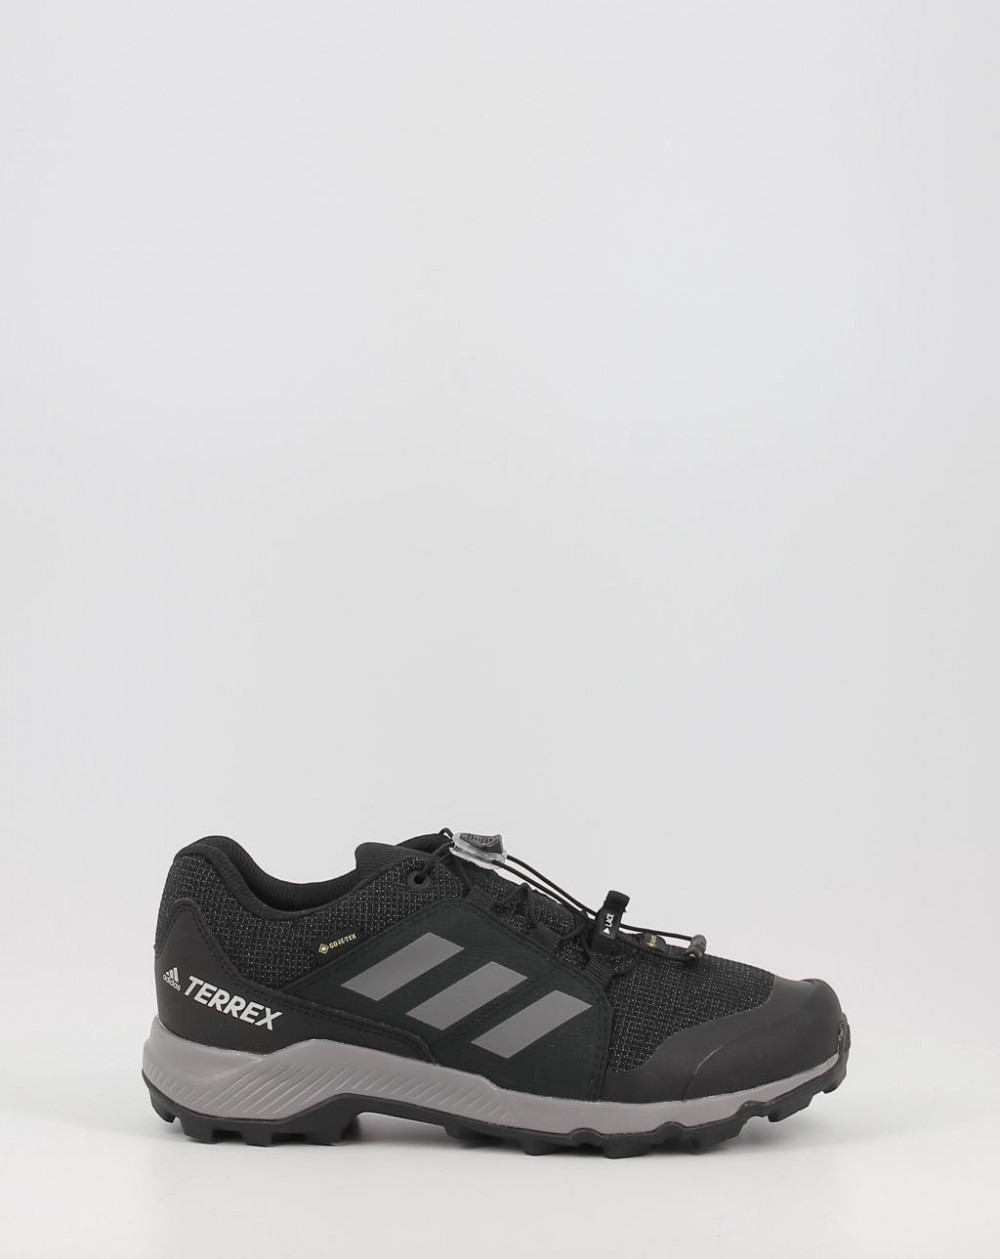 Zapatillas Adidas GTX K negro. Obi